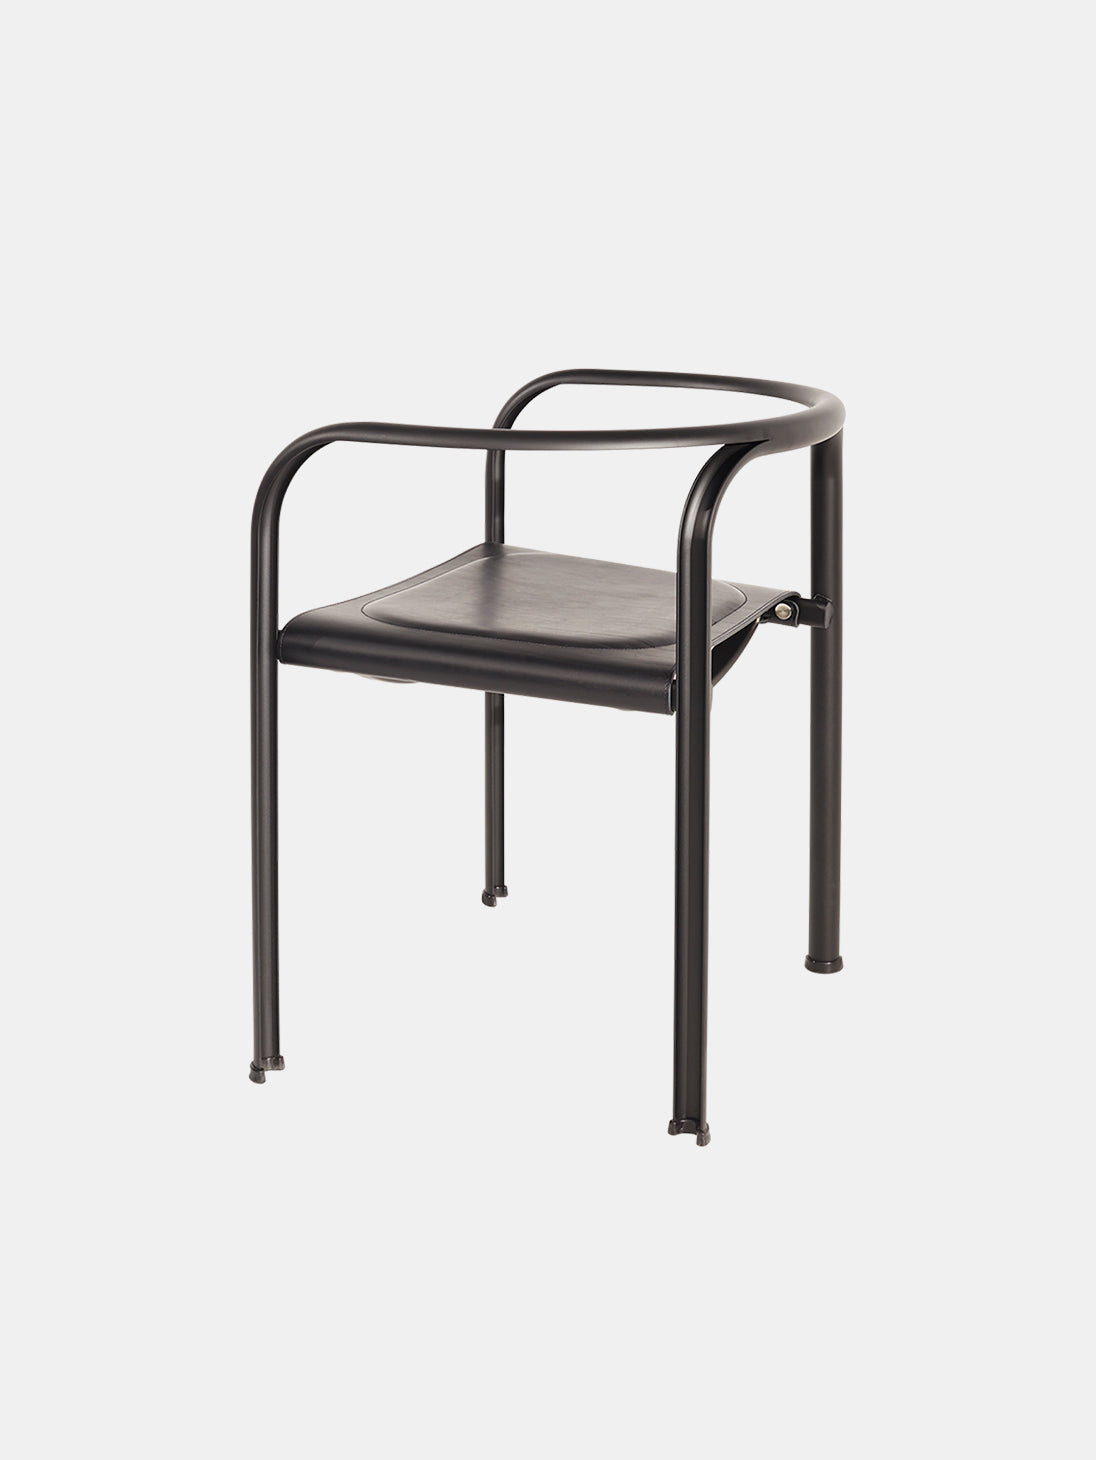 Split Chair SP designed by Daniel Lorch